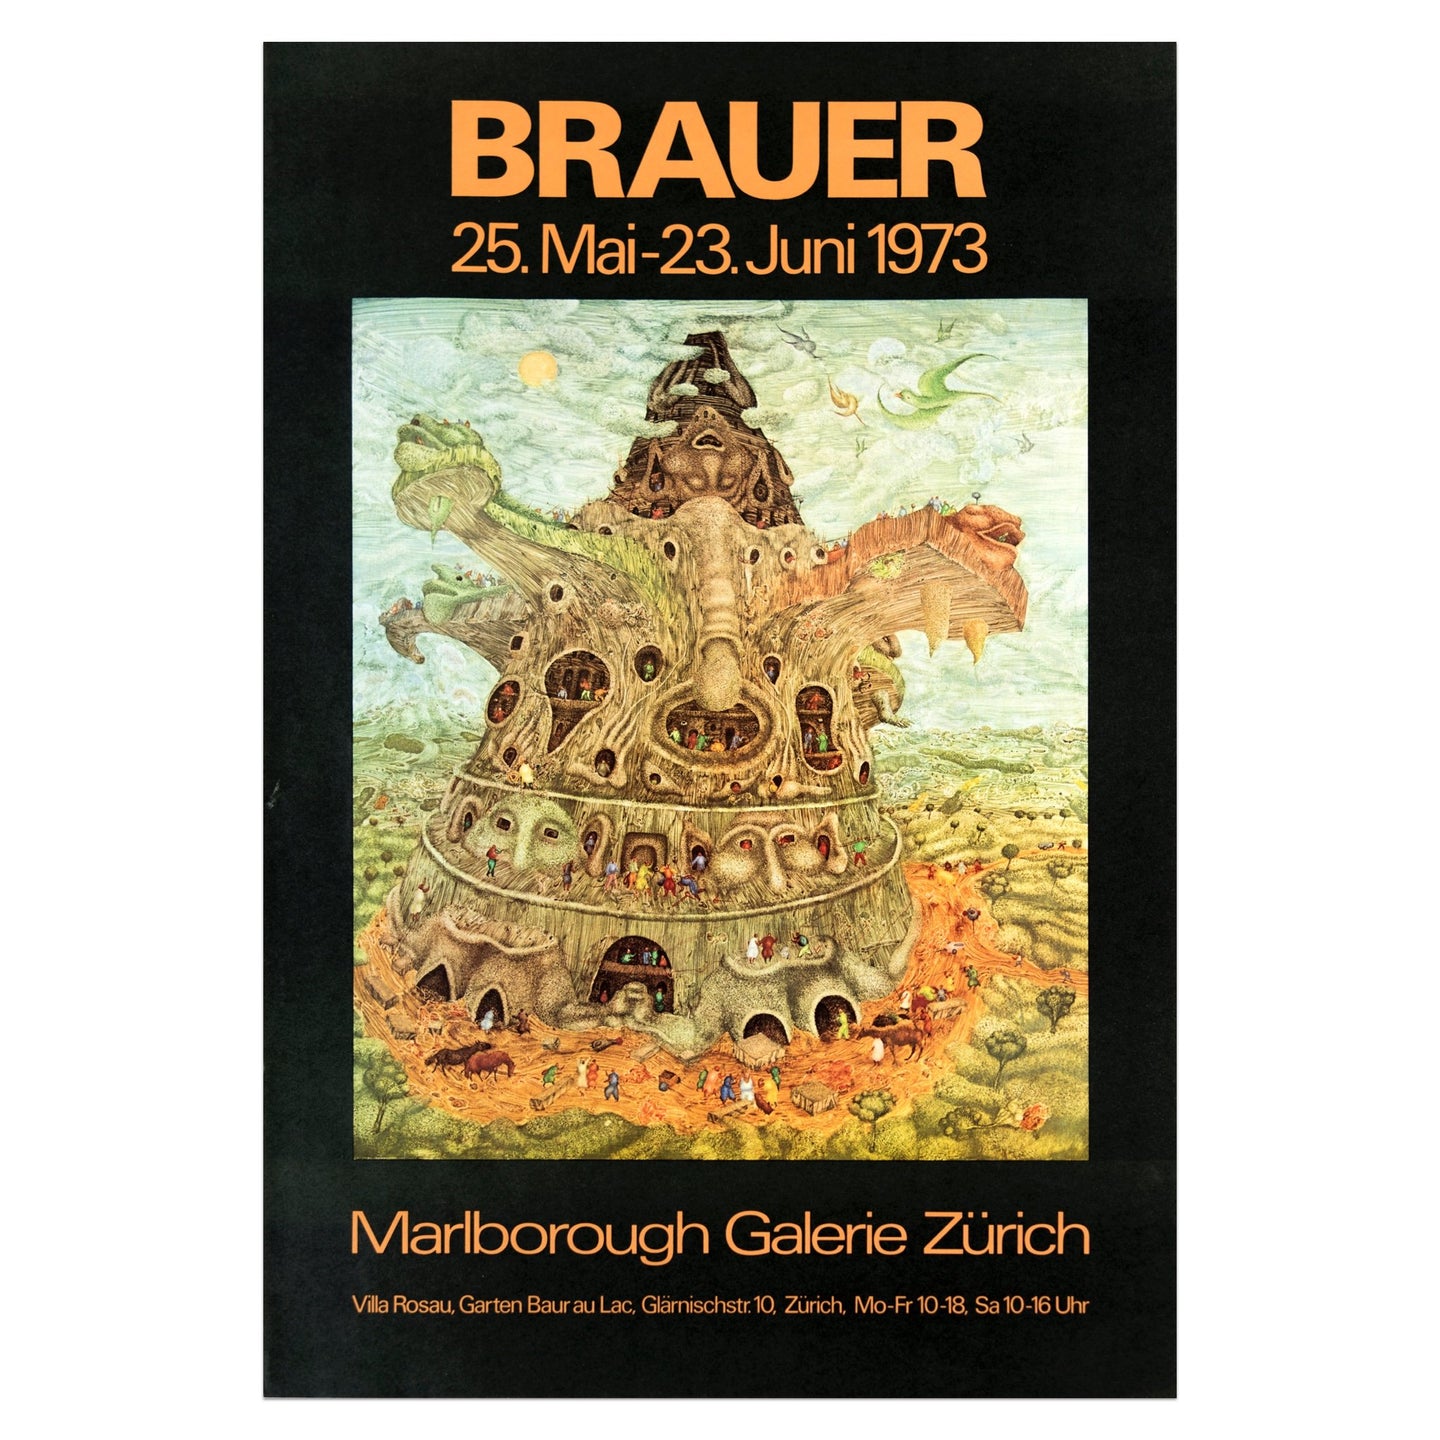 1973 Arik Brauer black and orange poster featuring a surreal landscape scene